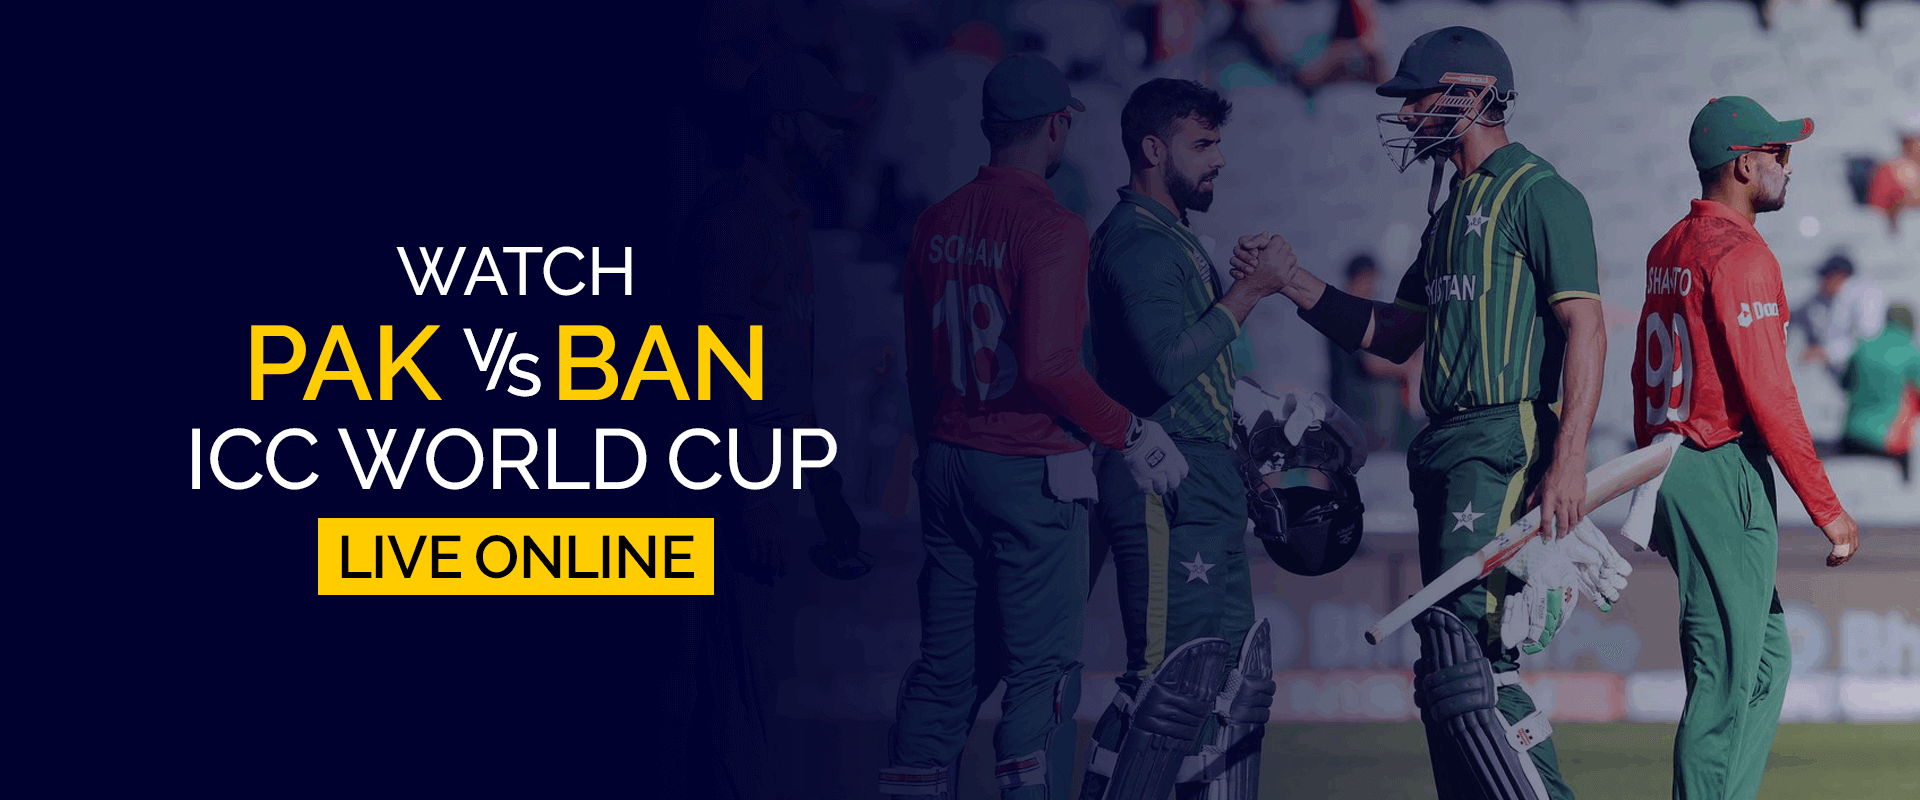 Watch Pakistan vs Bangladesh ICC World Cup Live Online